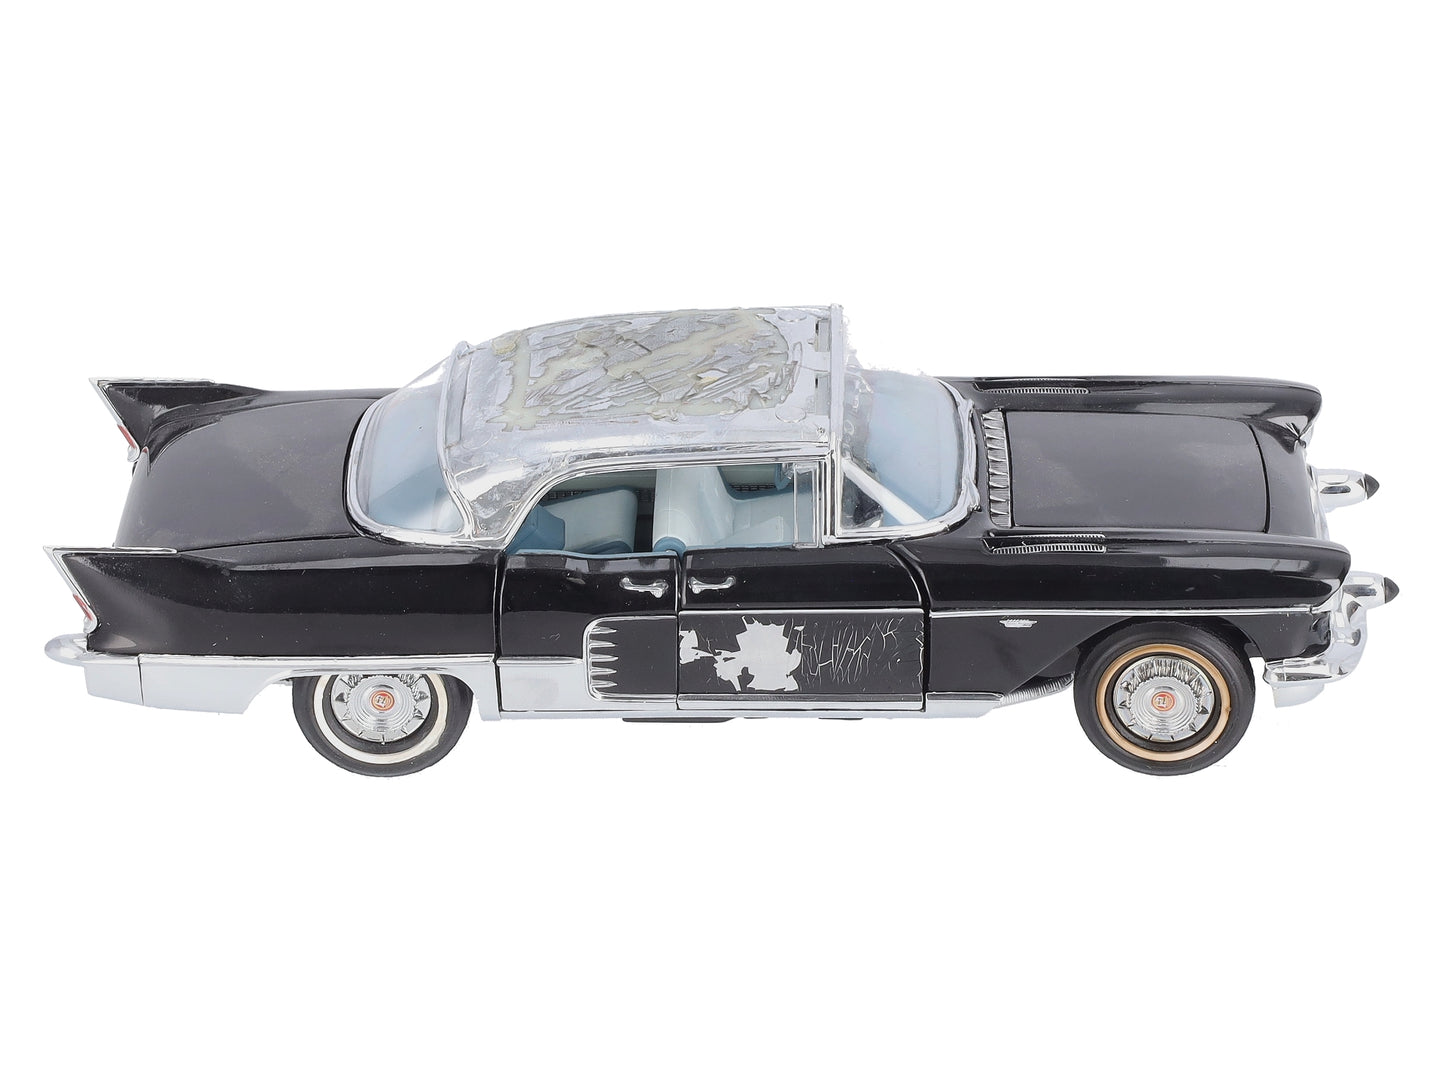 Franklin Mint B11UM66 1:24 Scale Die Cast 1957 Cadillac Eldorado in Black EX/Box